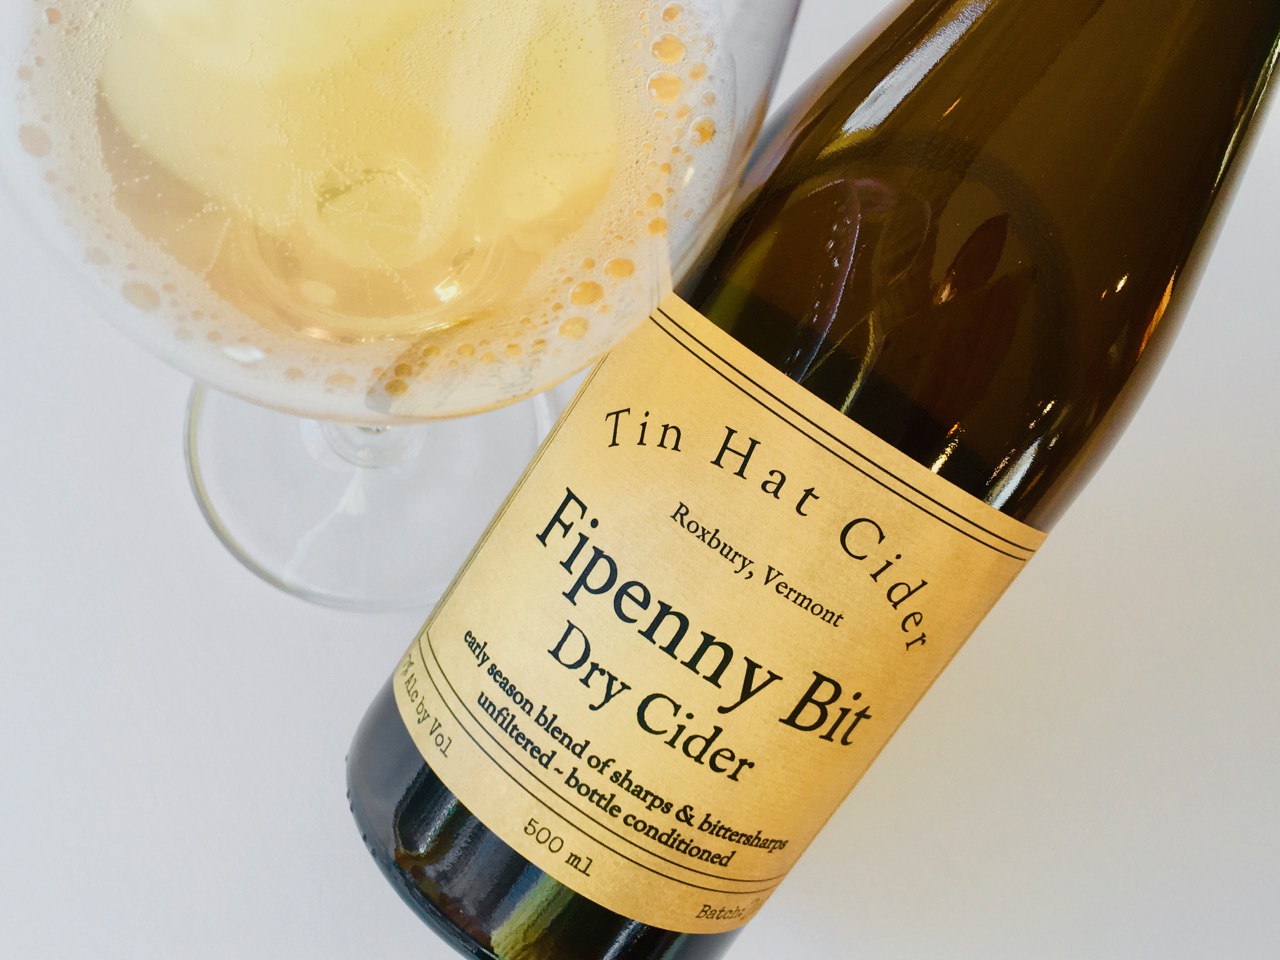 Tin Hat Fipenny Bit Dry Cider